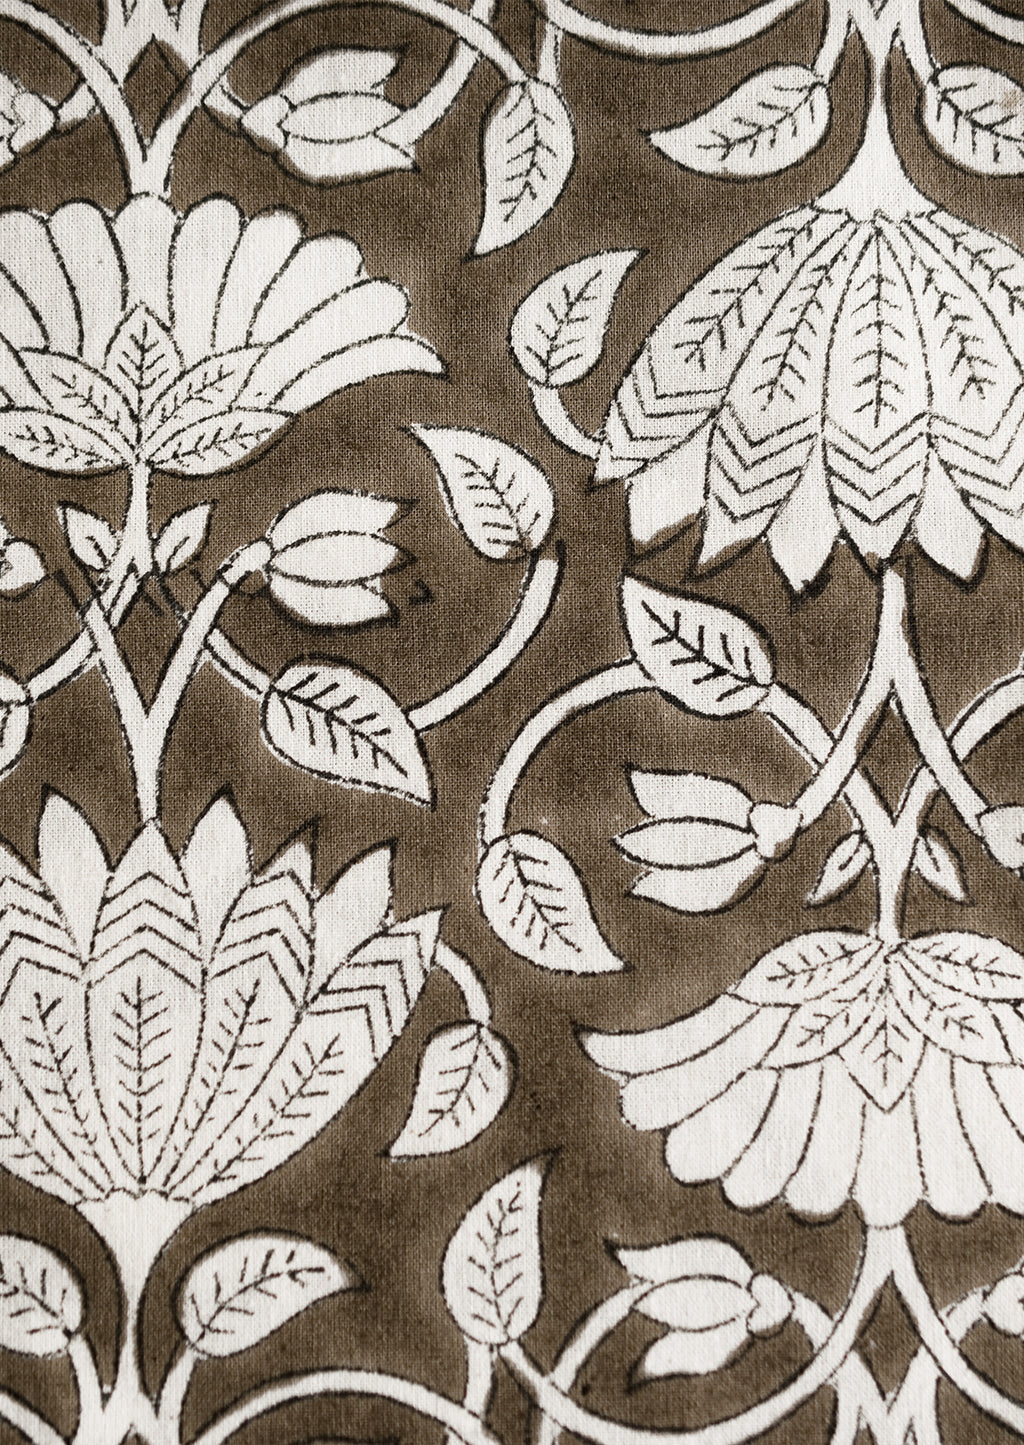 2: A dark brown and white lotus print block print pattern.